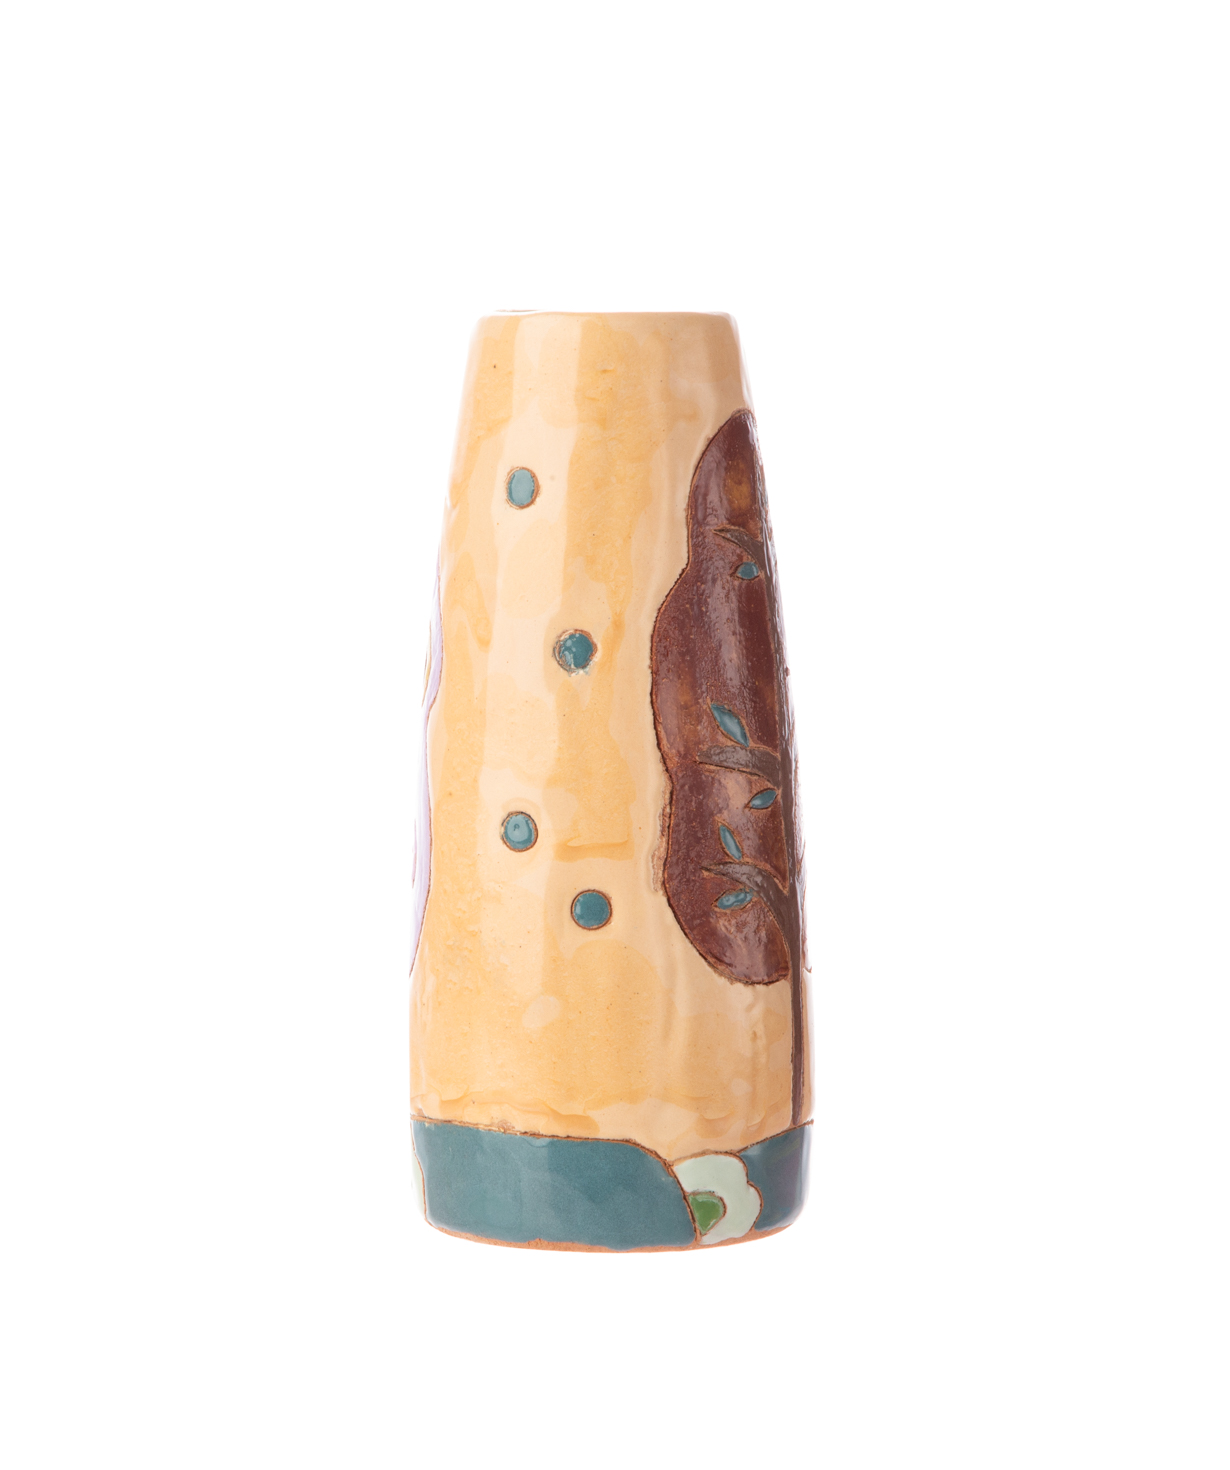 Vase `Nuard Ceramics` for flowers, trees №2